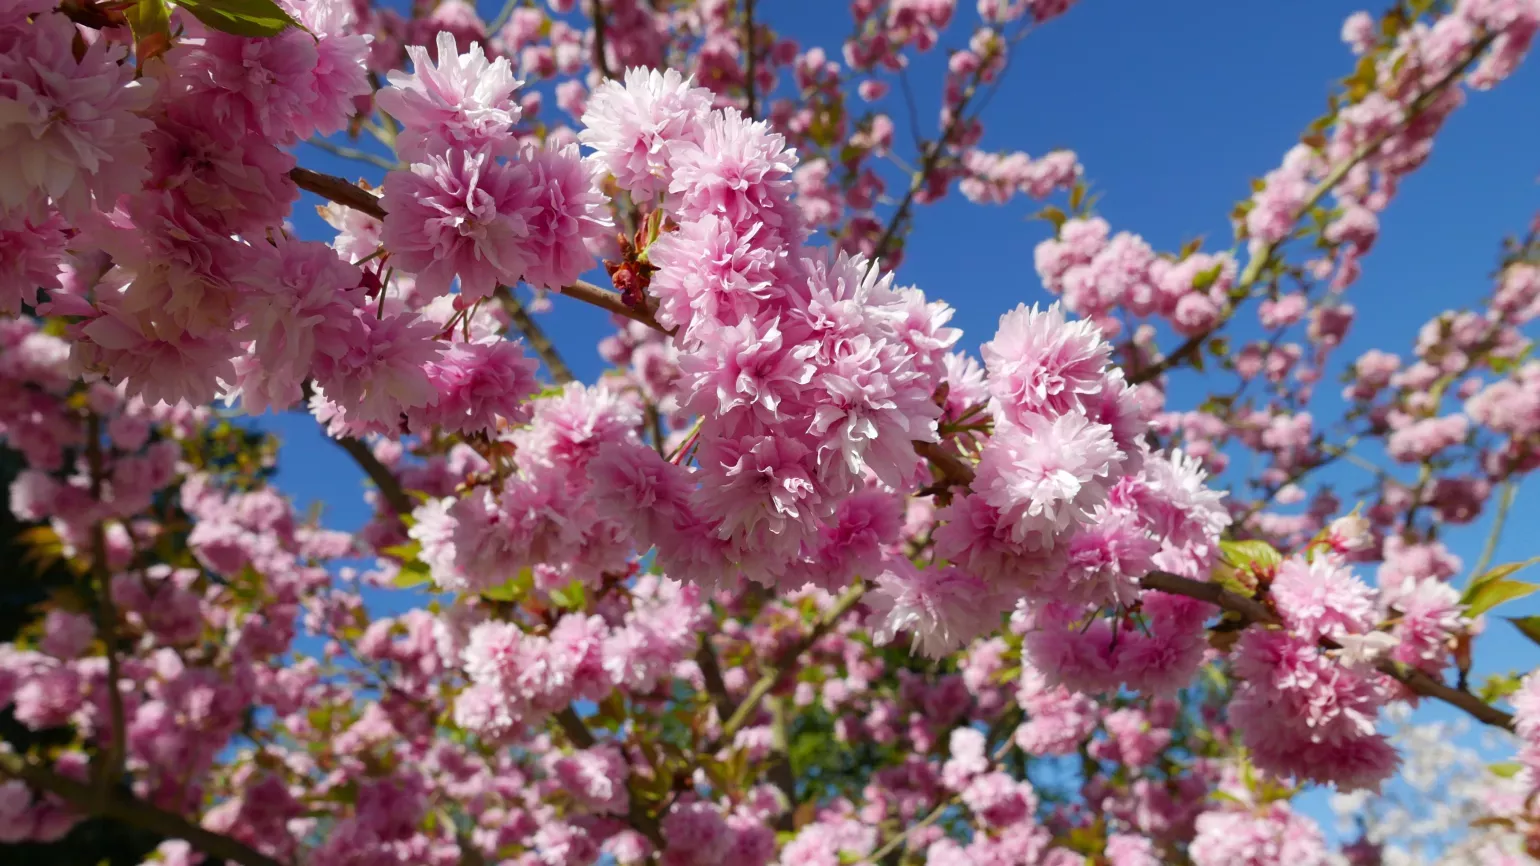 Deep pink cherry blossom